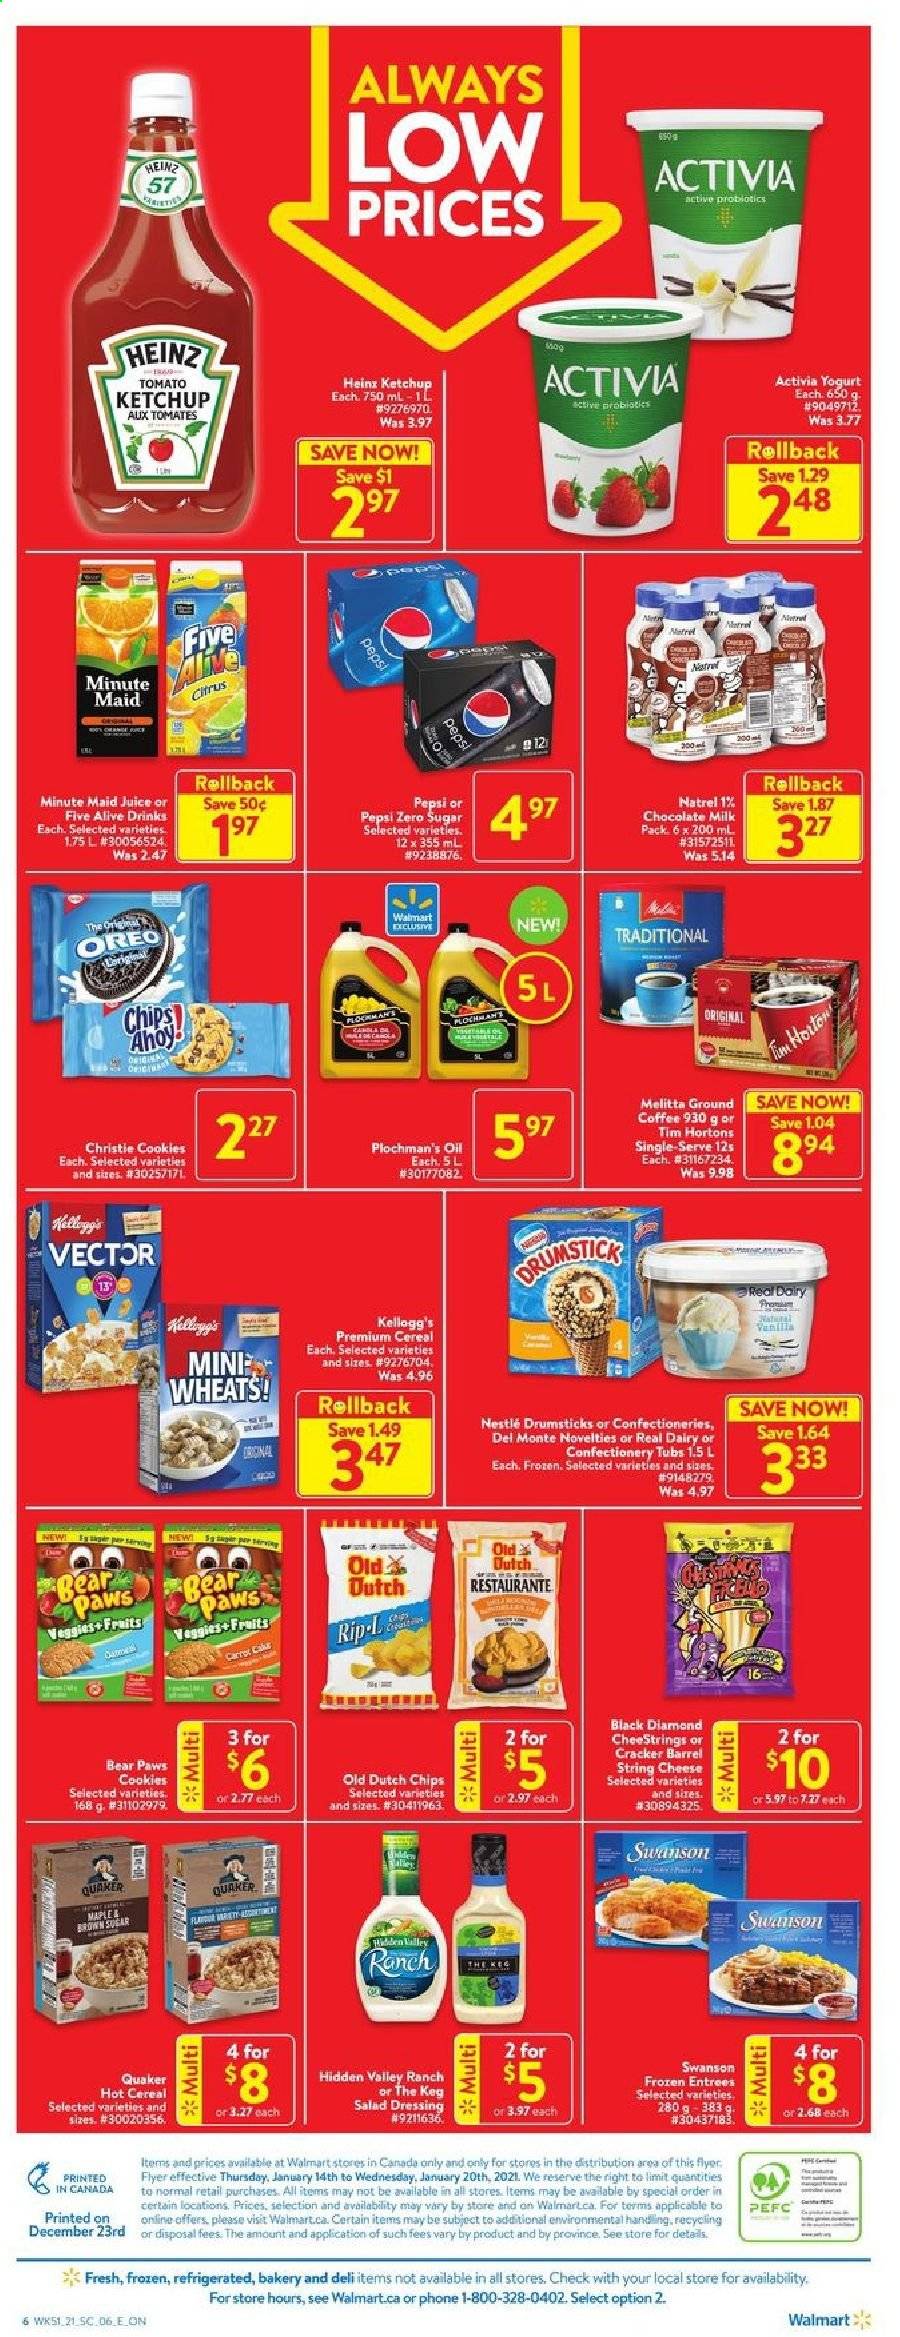 thumbnail - Circulaire Walmart - 14 Janvier 2021 - 20 Janvier 2021 - Produits soldés - Nestlé, cookies, chips, Pepsi, Activia, Kellogg's, Always, dressing, ketchup. Page 2.